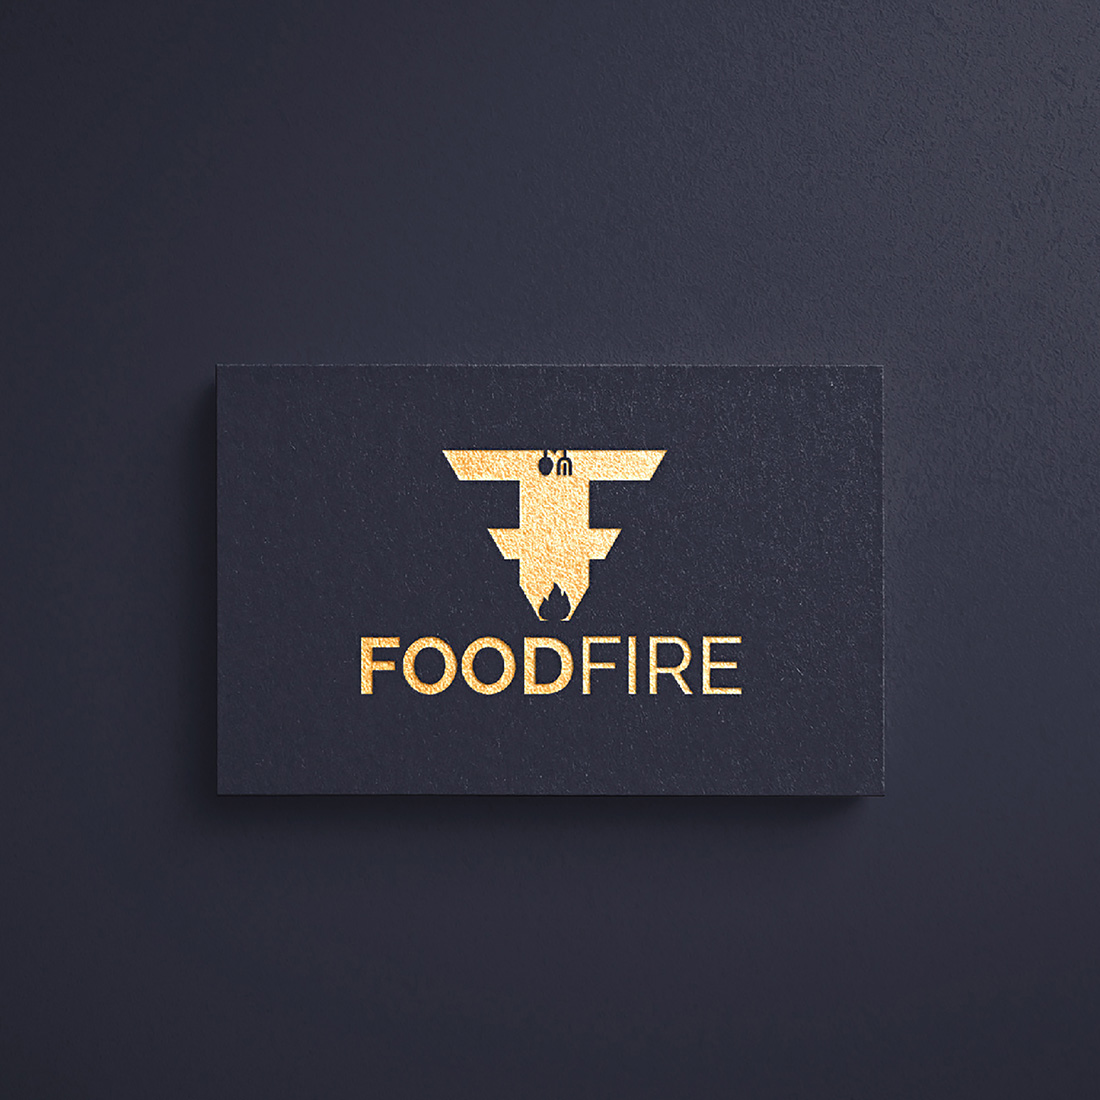 Food Fire Minimal Logo Design cover image.